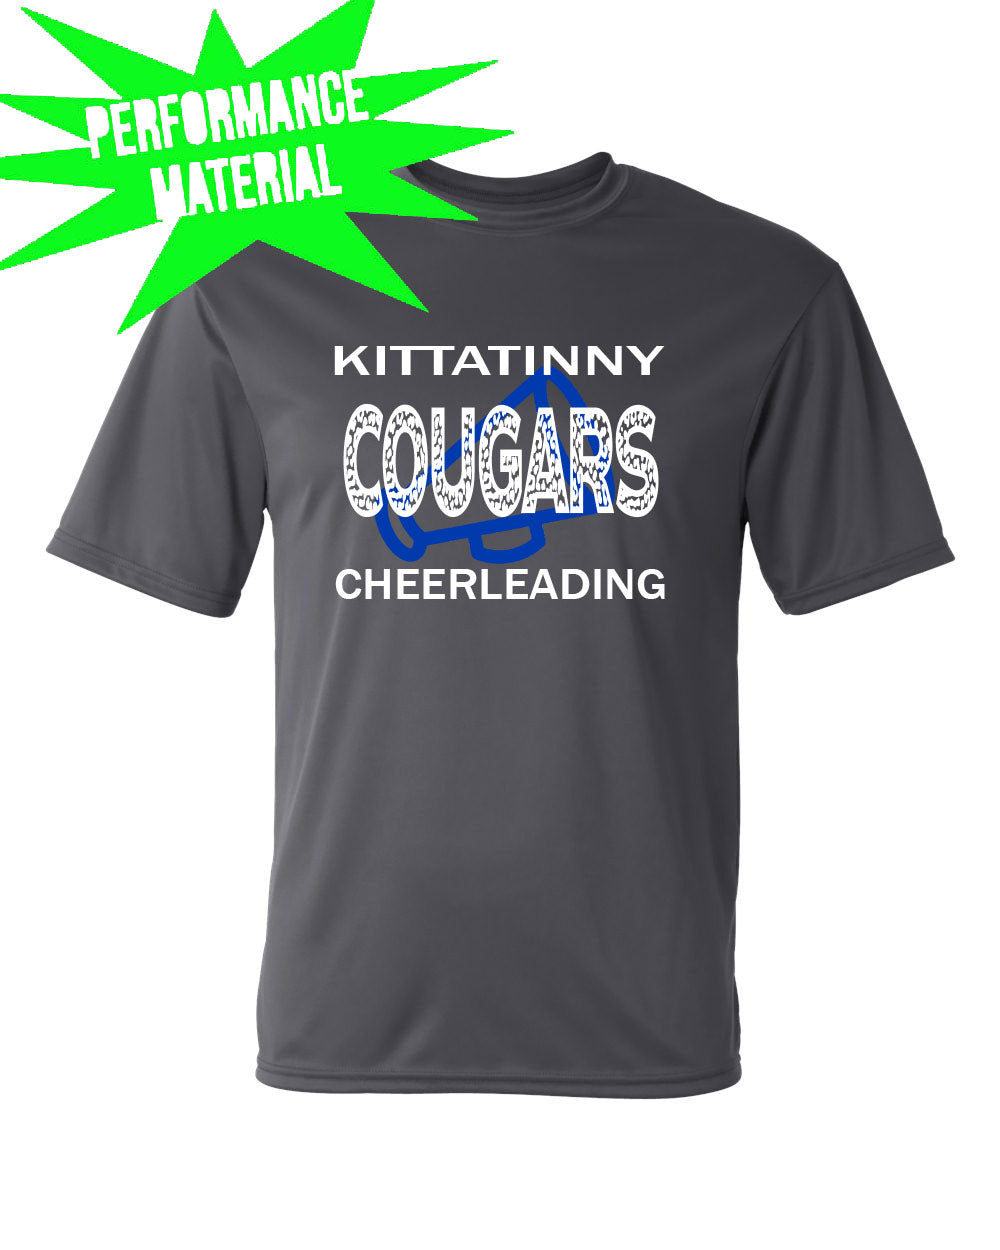 Kittatinny Cheer Performance Material T-Shirt Design 10